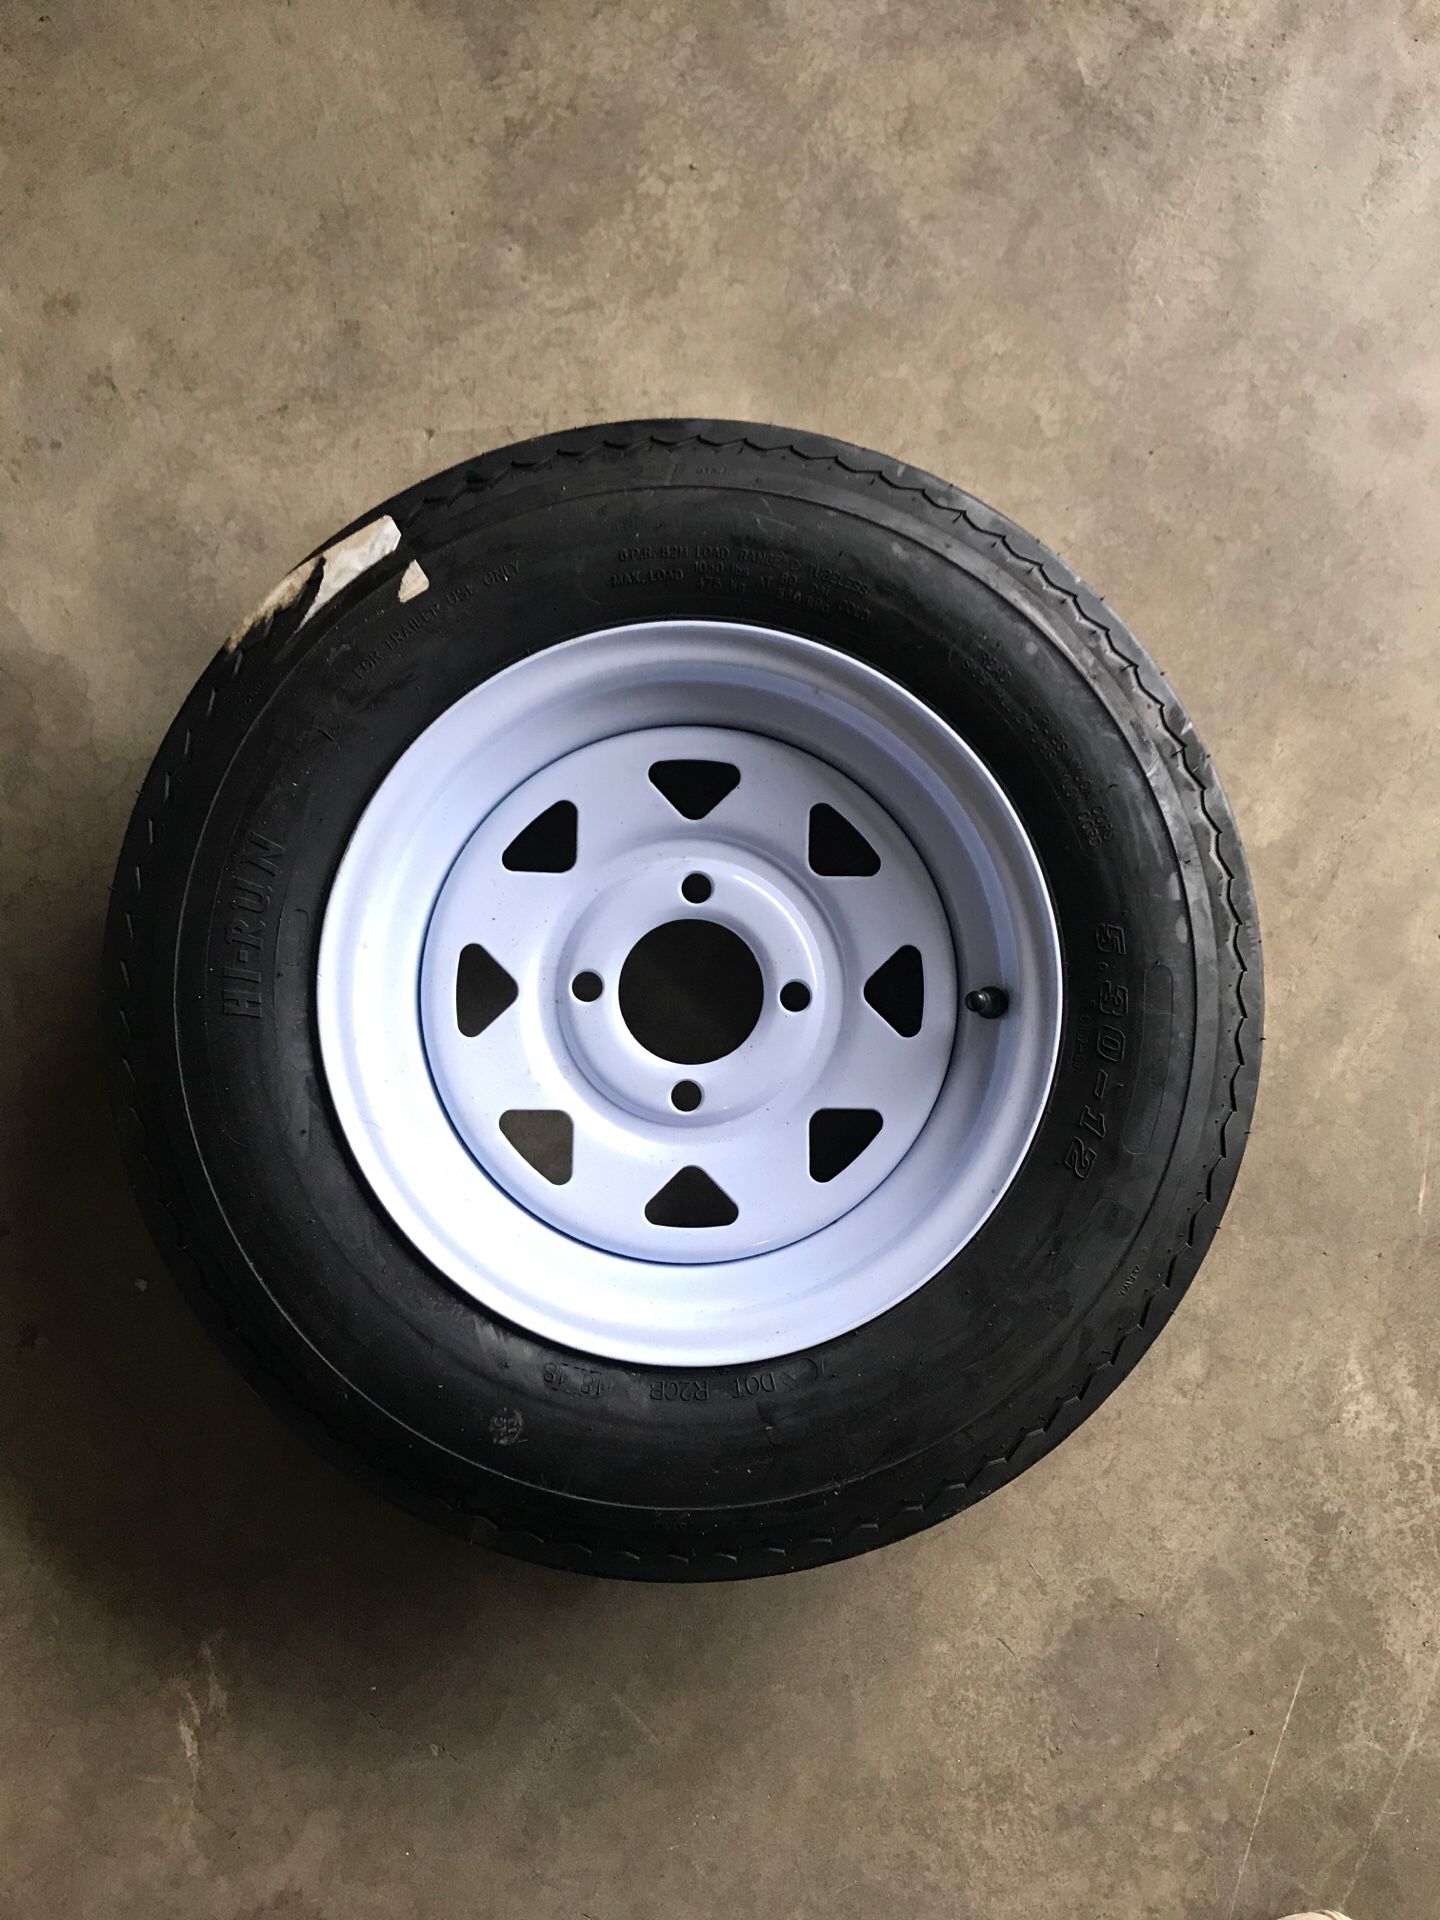 Brand new trailer tire